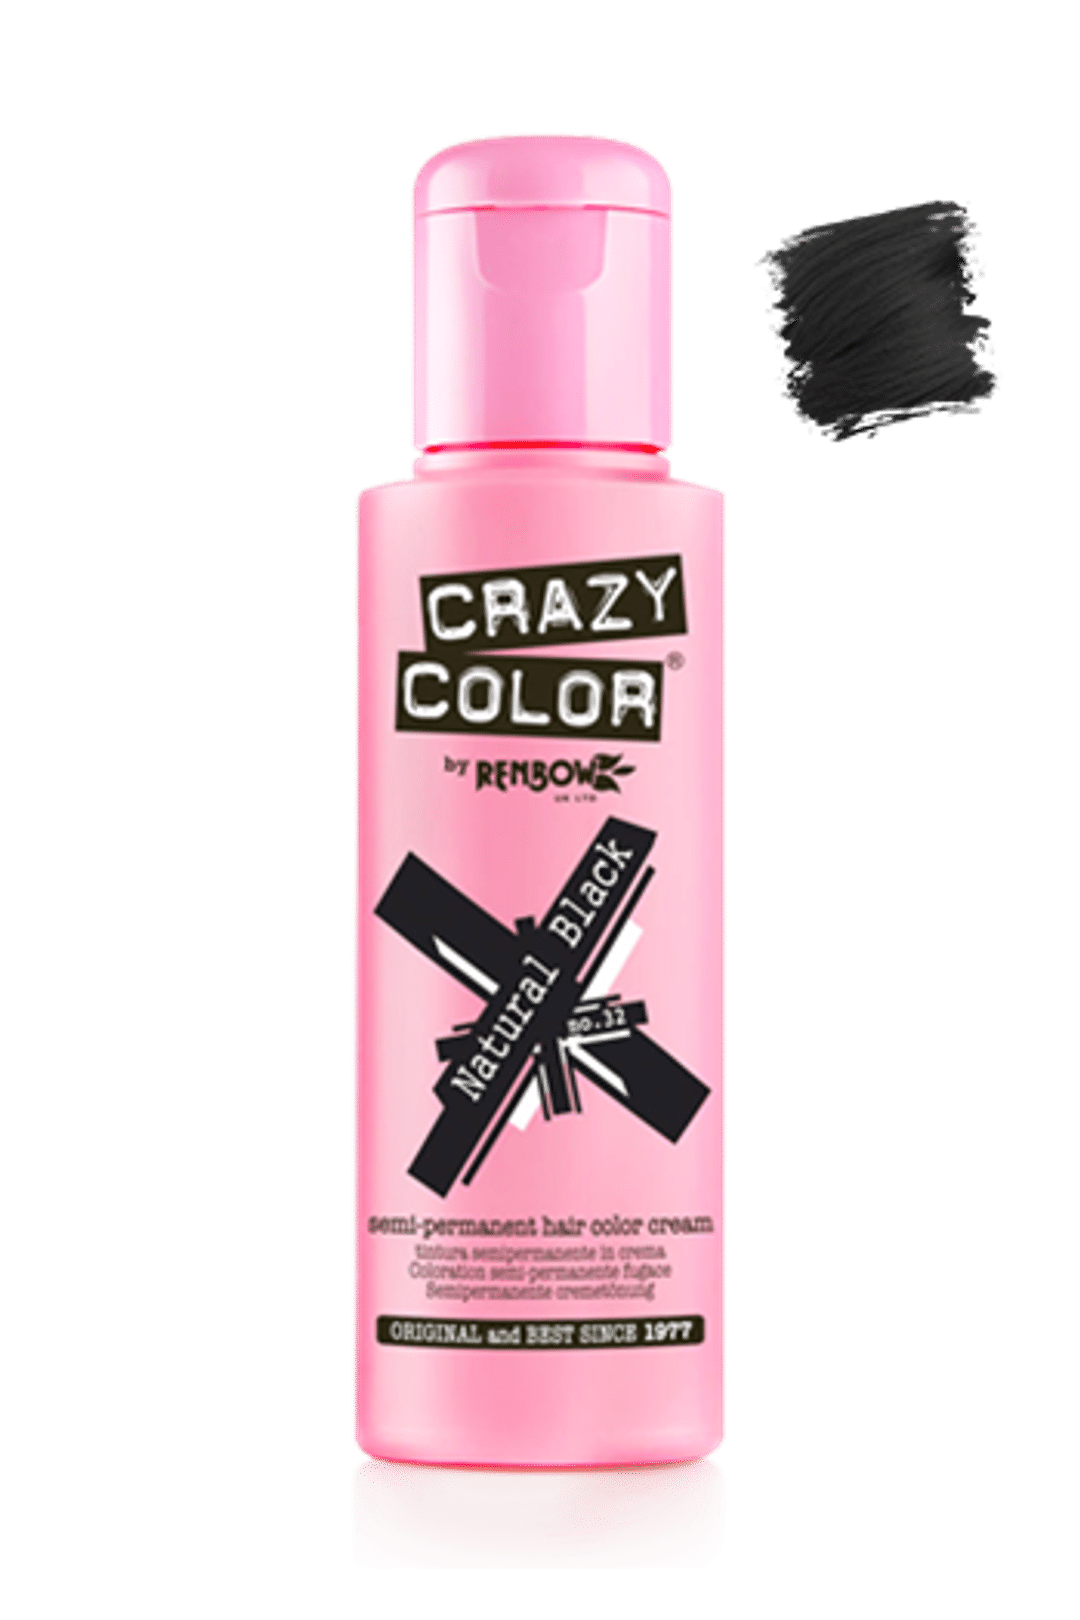 Crazy Color Semi Permanent Hair Color Cream - Natural Black